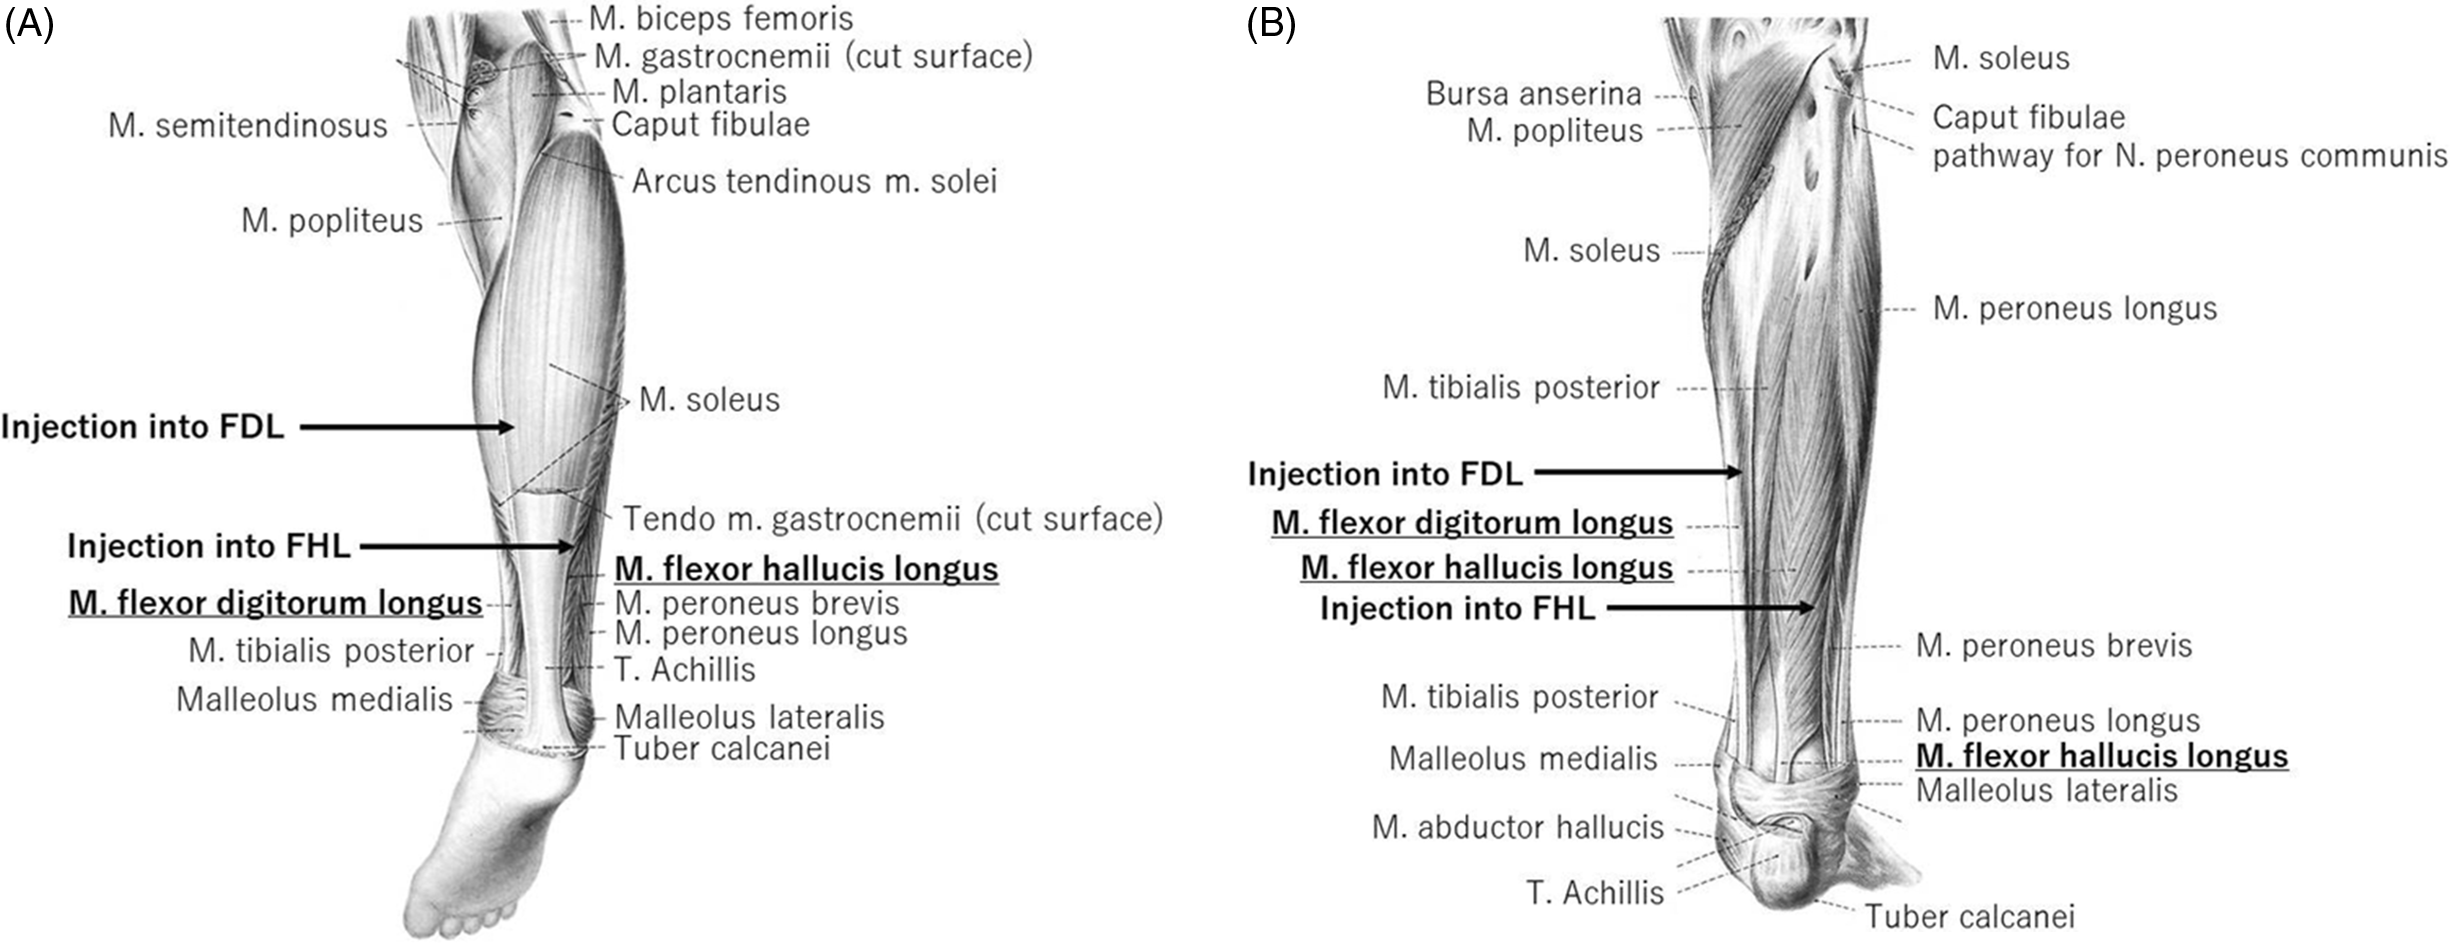 tibial posterior flexor digitorum longus flexor hallucis longus